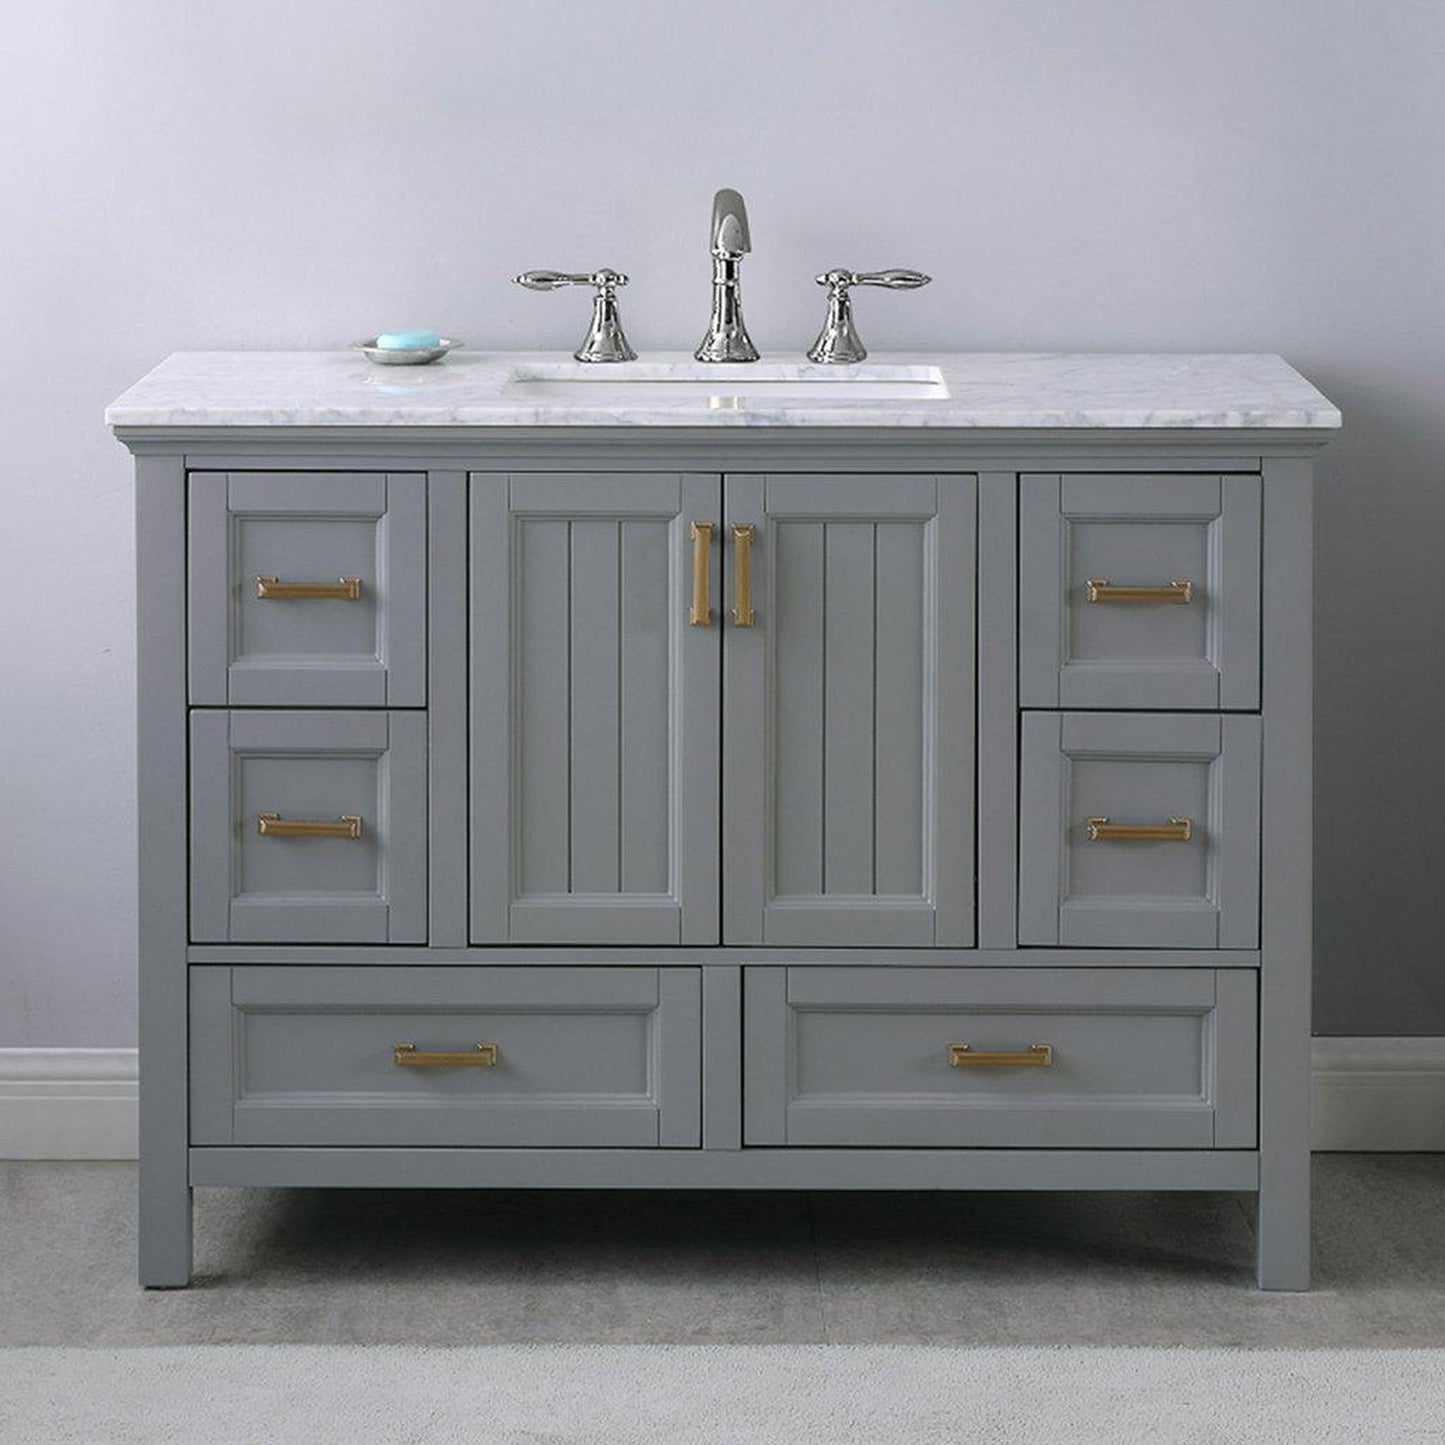 Altair Isla 48" Single Gray Freestanding Bathroom Vanity Set With Natural Carrara White Marble Top, Rectangular Undermount Ceramic Sink, and Overflow